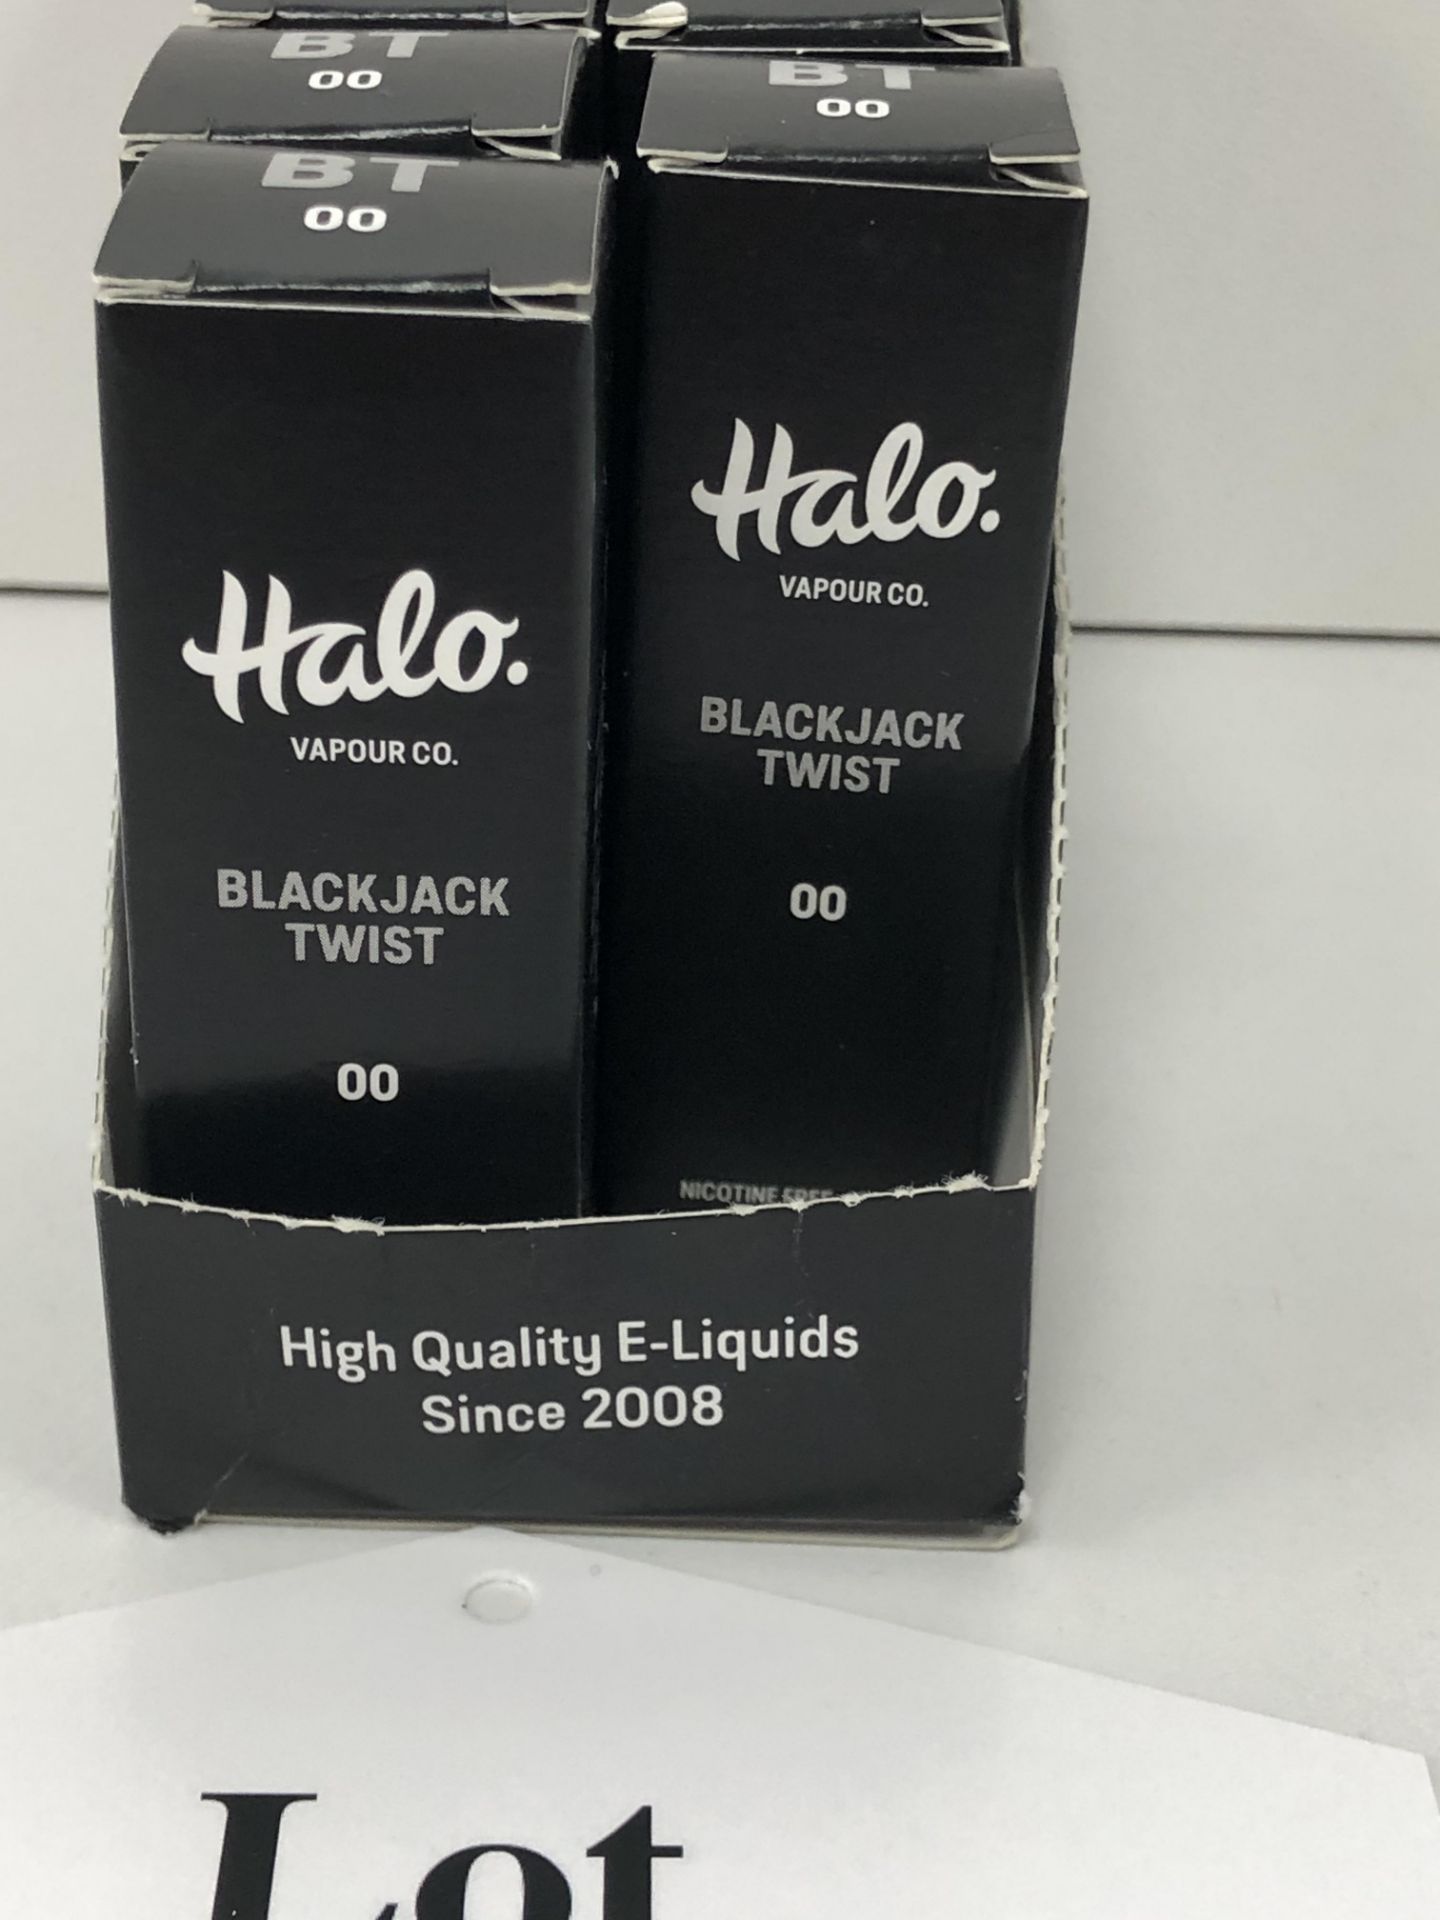 9 x Vapour co Blackjack twist Halo BNIB - 10 ml |96129524 - Image 6 of 7